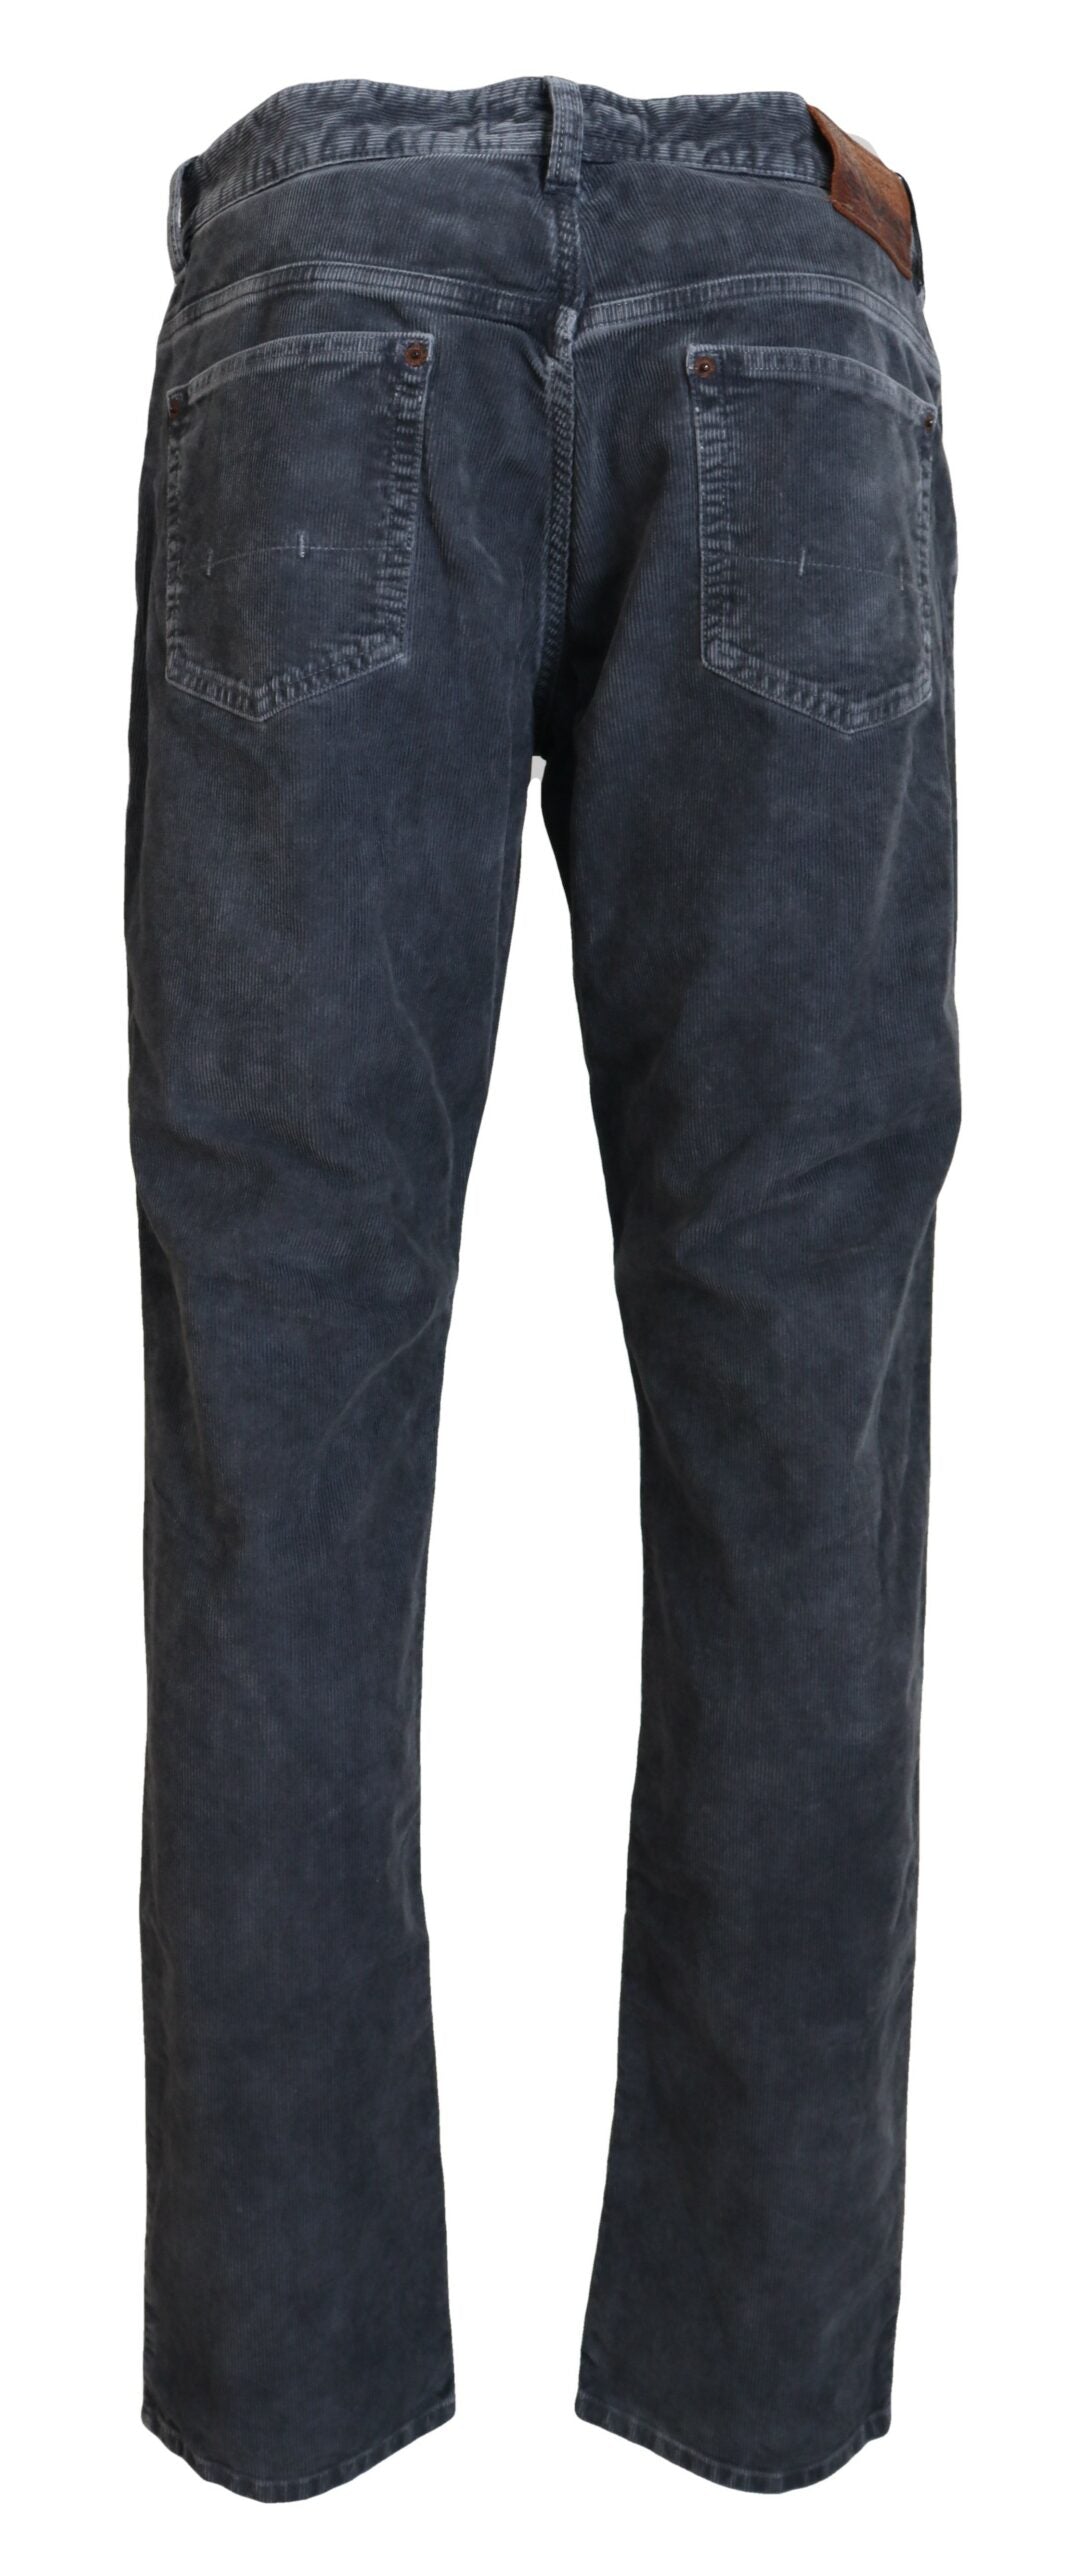 Elegant Gray Corduroy Pants for Men